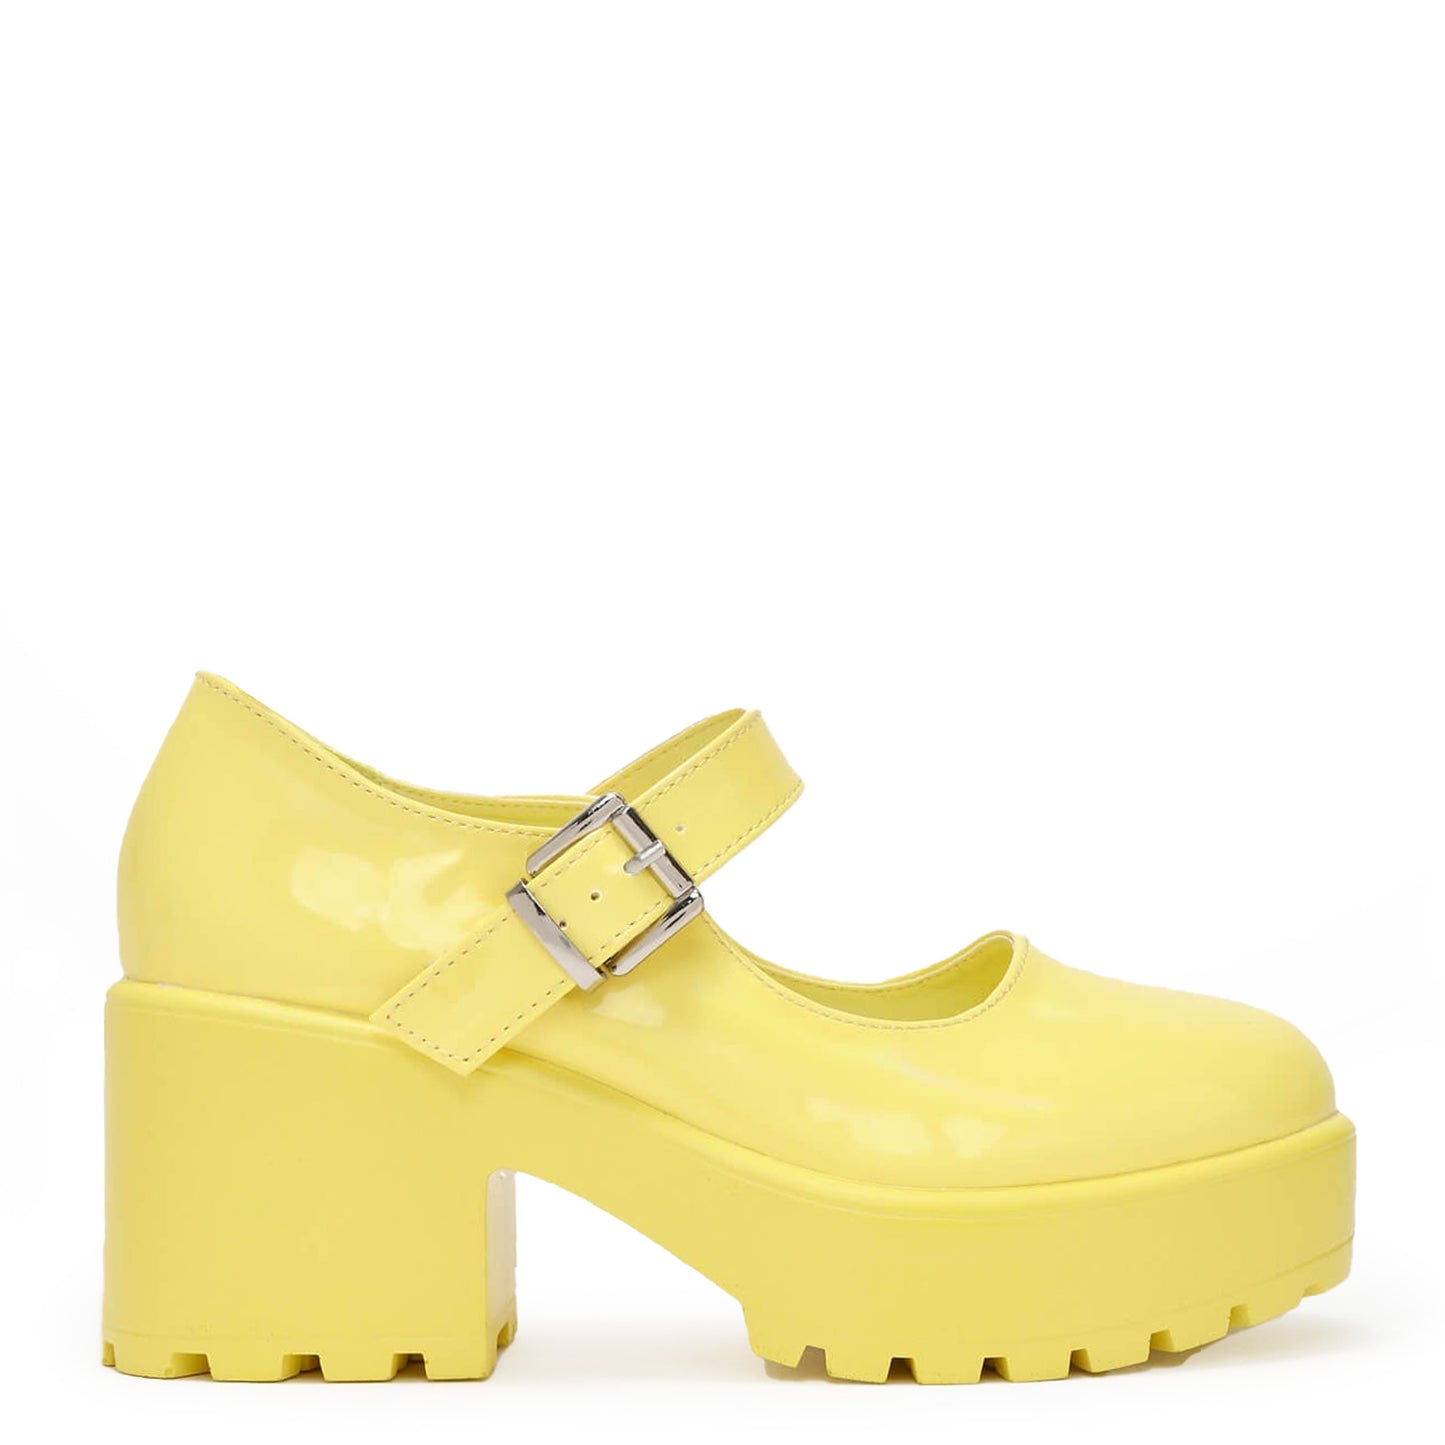 Tira Mary Jane Shoes 'Sunshine Yellow Edition' - Mary Janes - KOI Footwear - Yellow - Main View